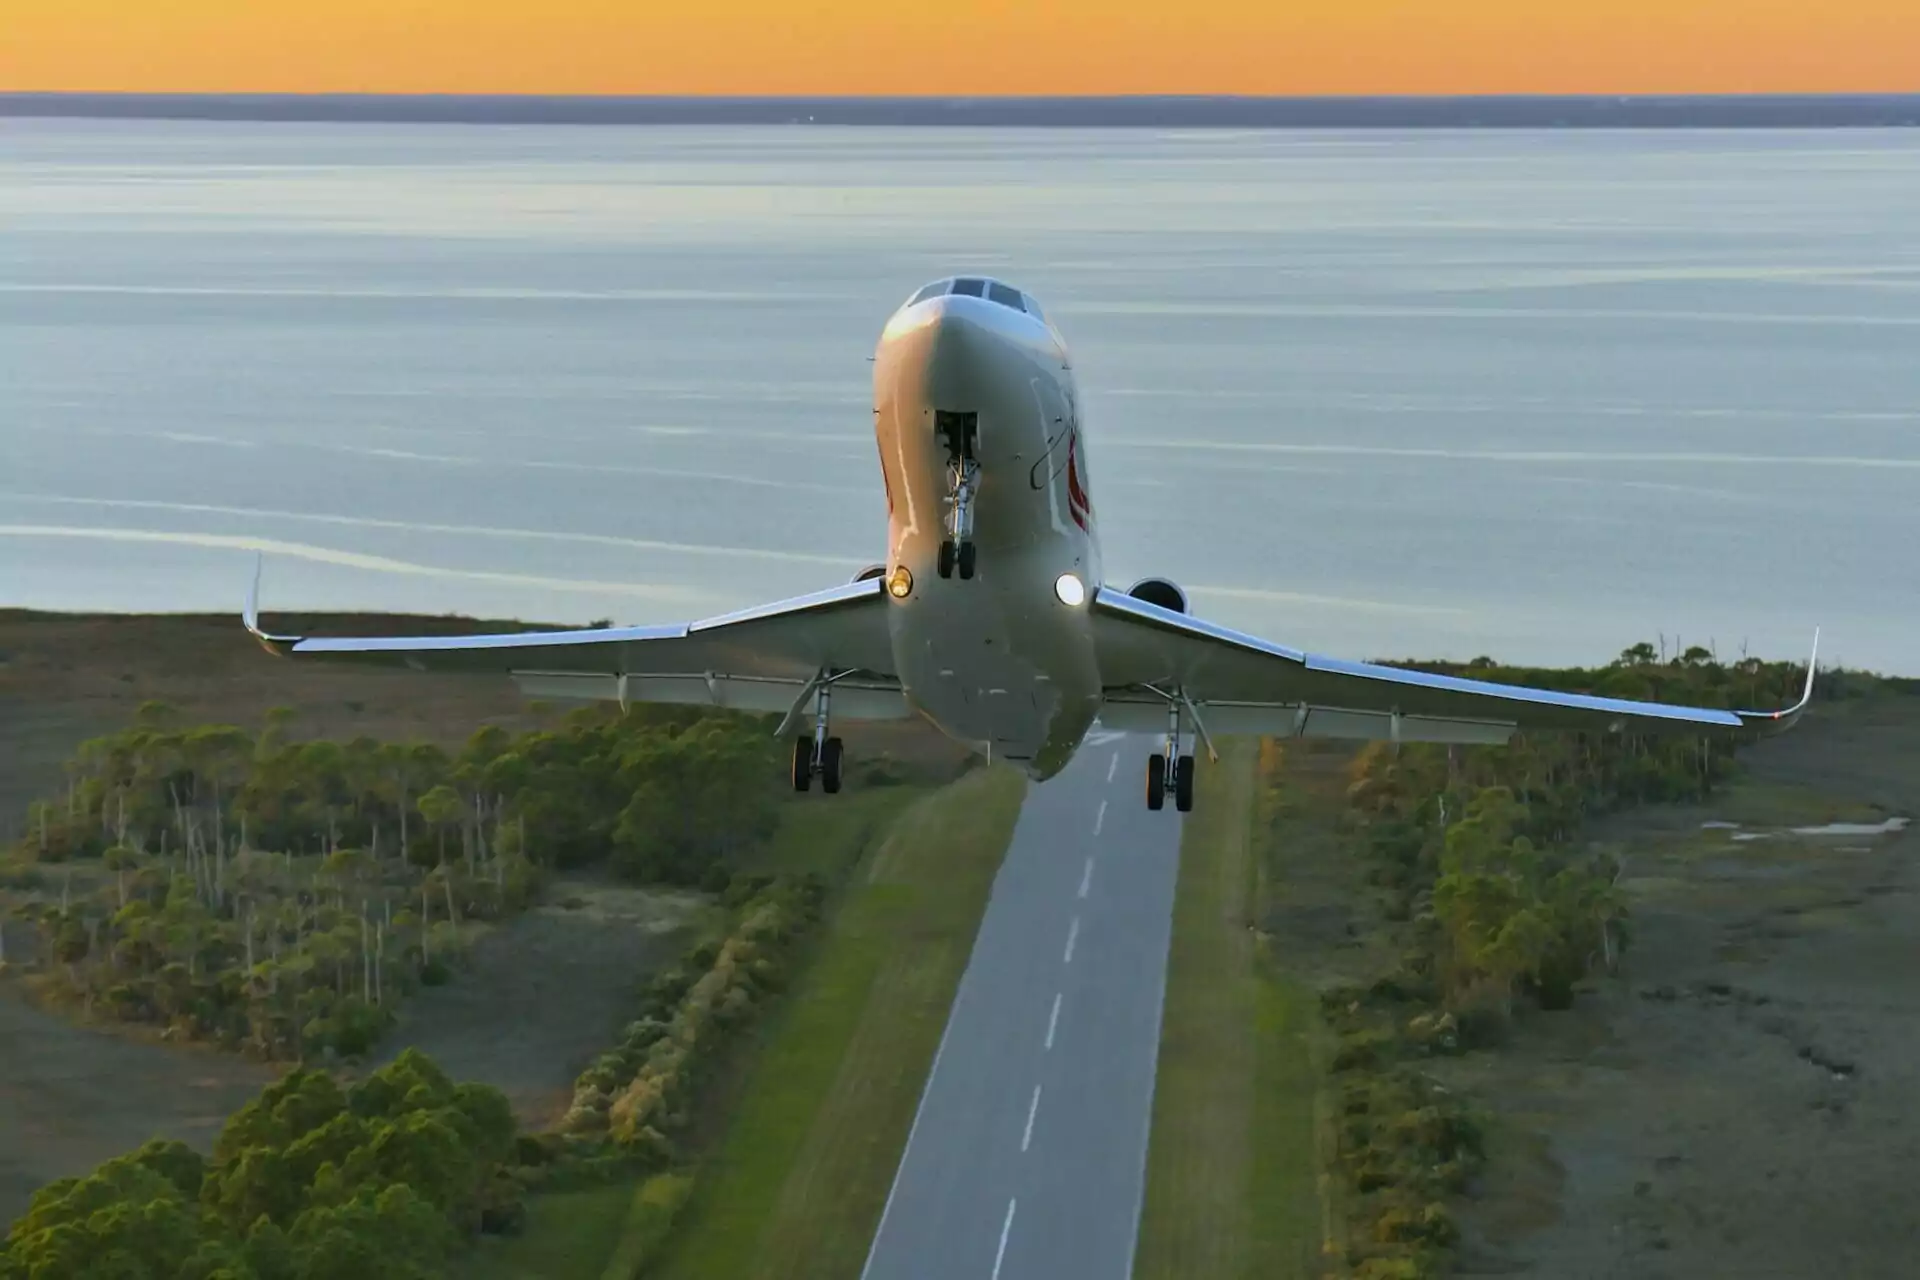 Hoe ver kan private jets vlieg - maksimum reikafstand